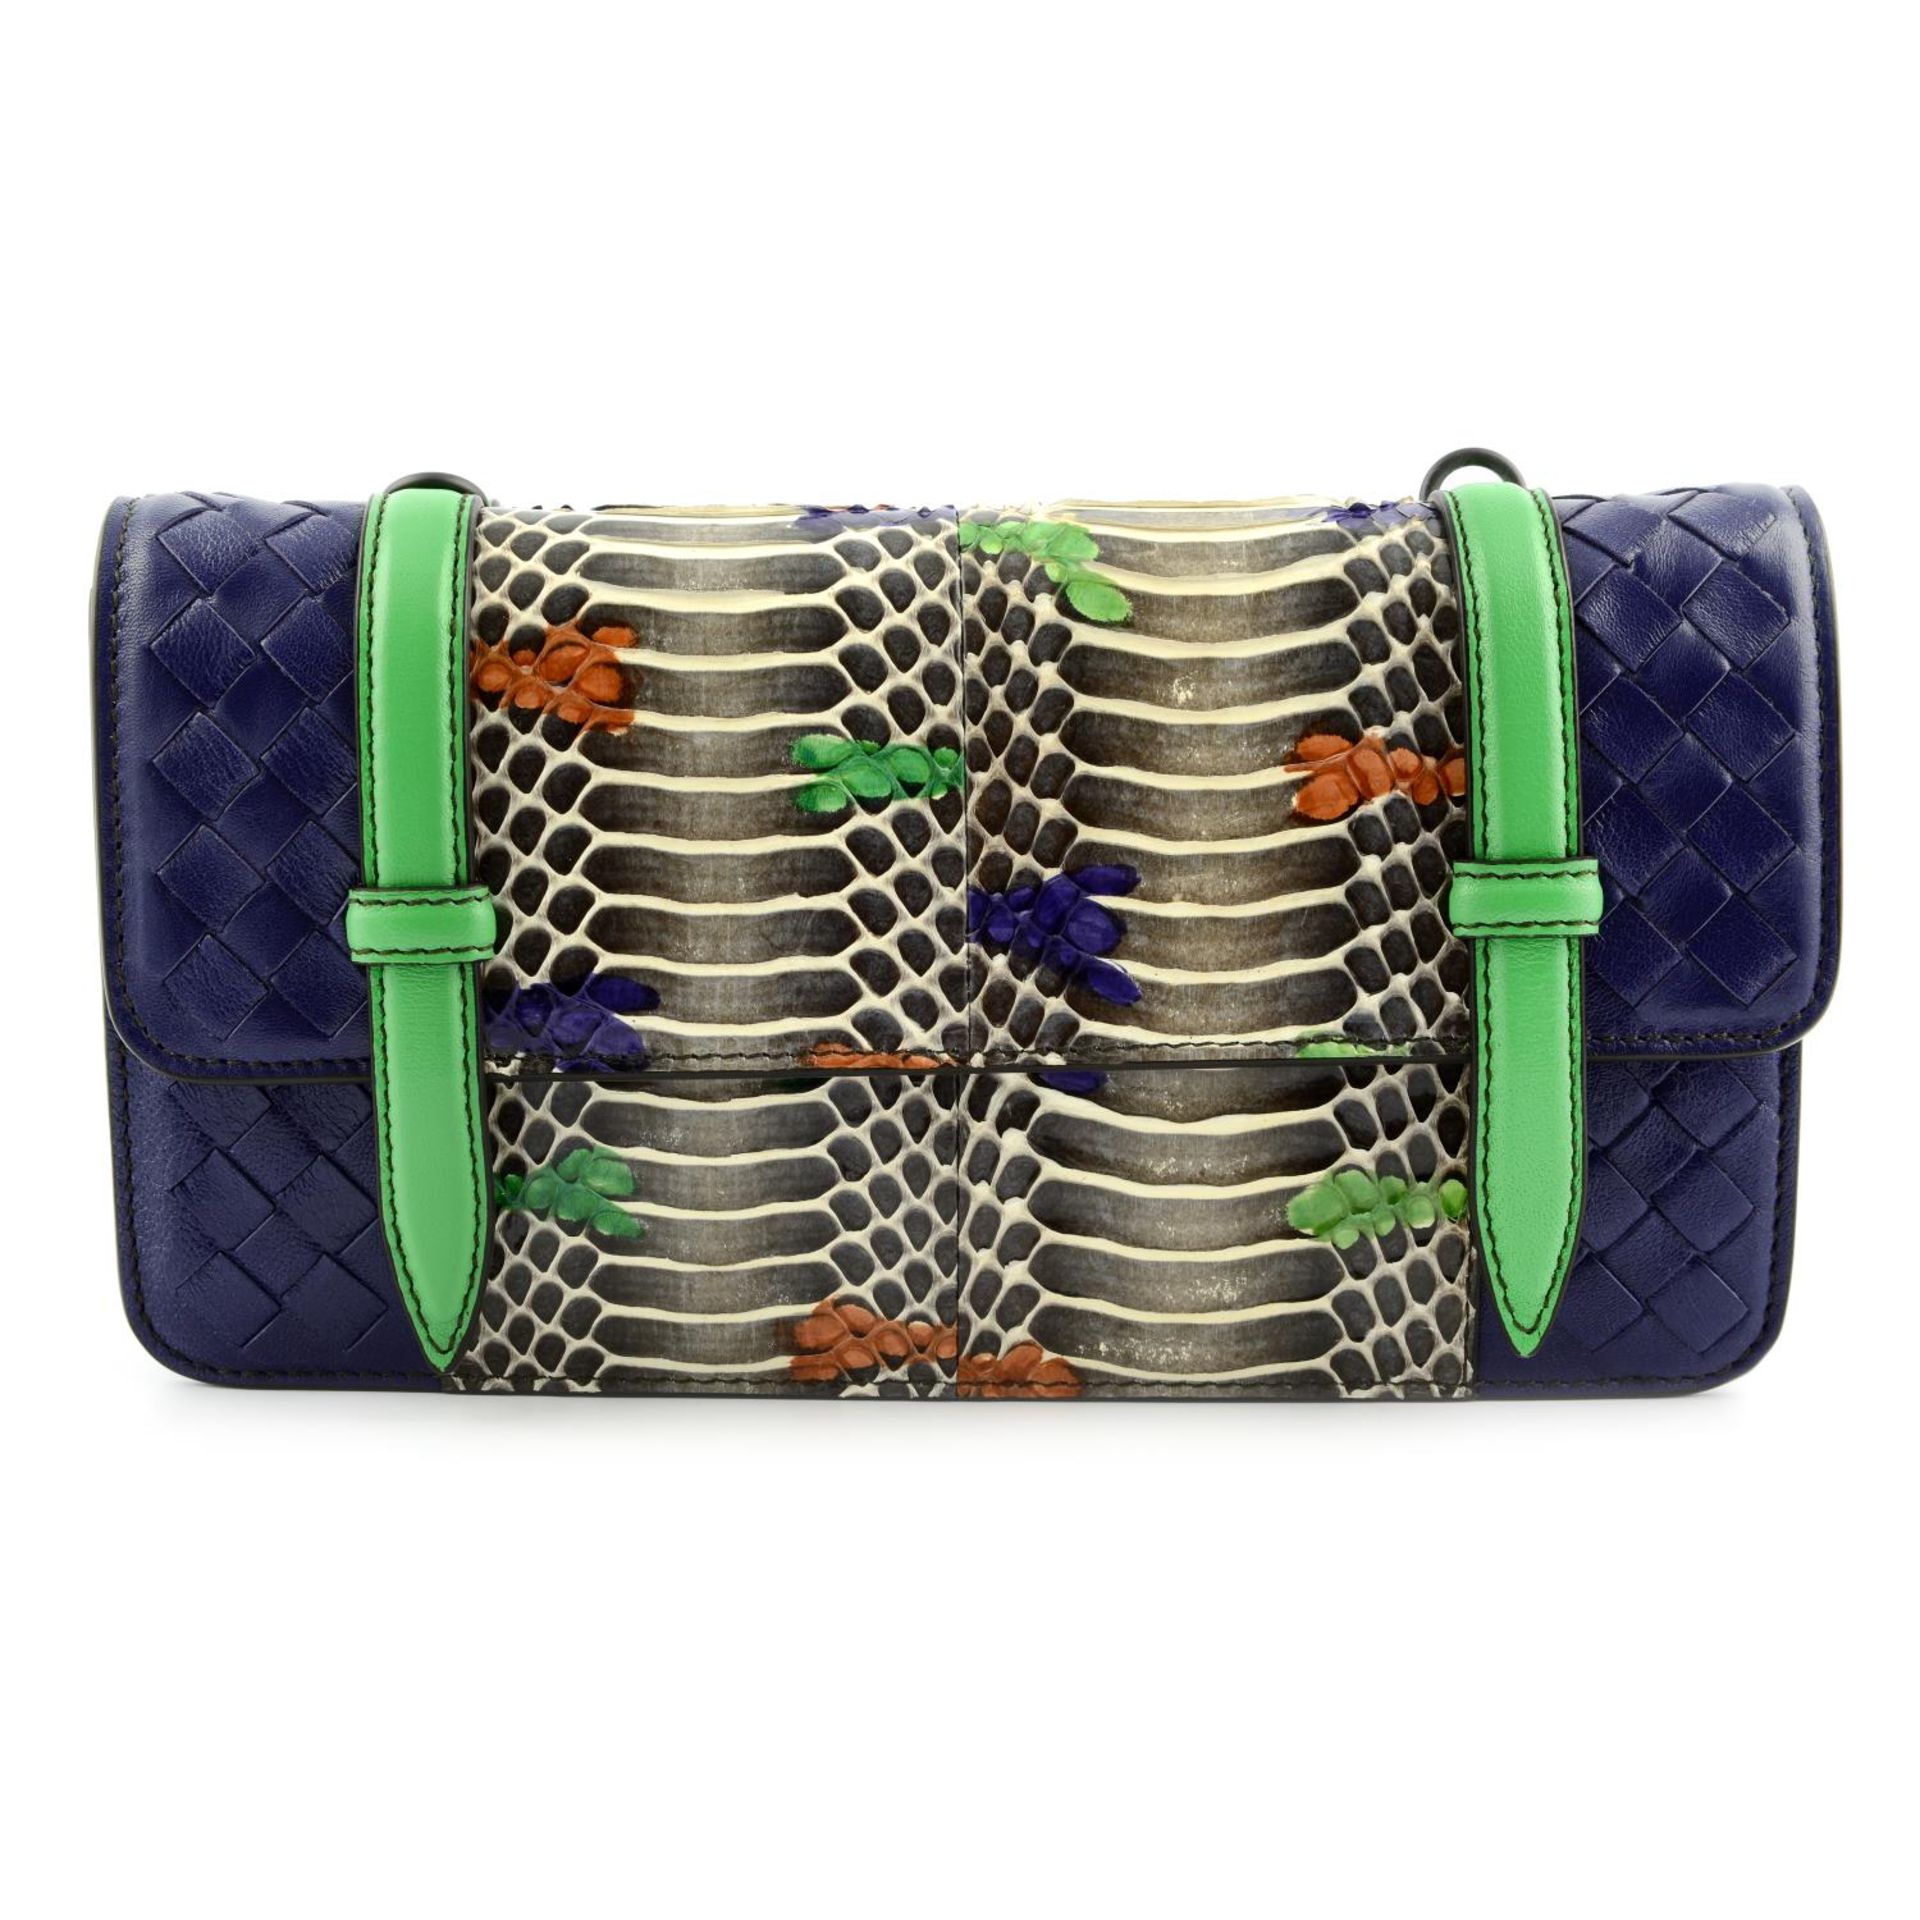 BOTTEGA VENETA - a multicolour Intrecciato leather and python baguette handbag.